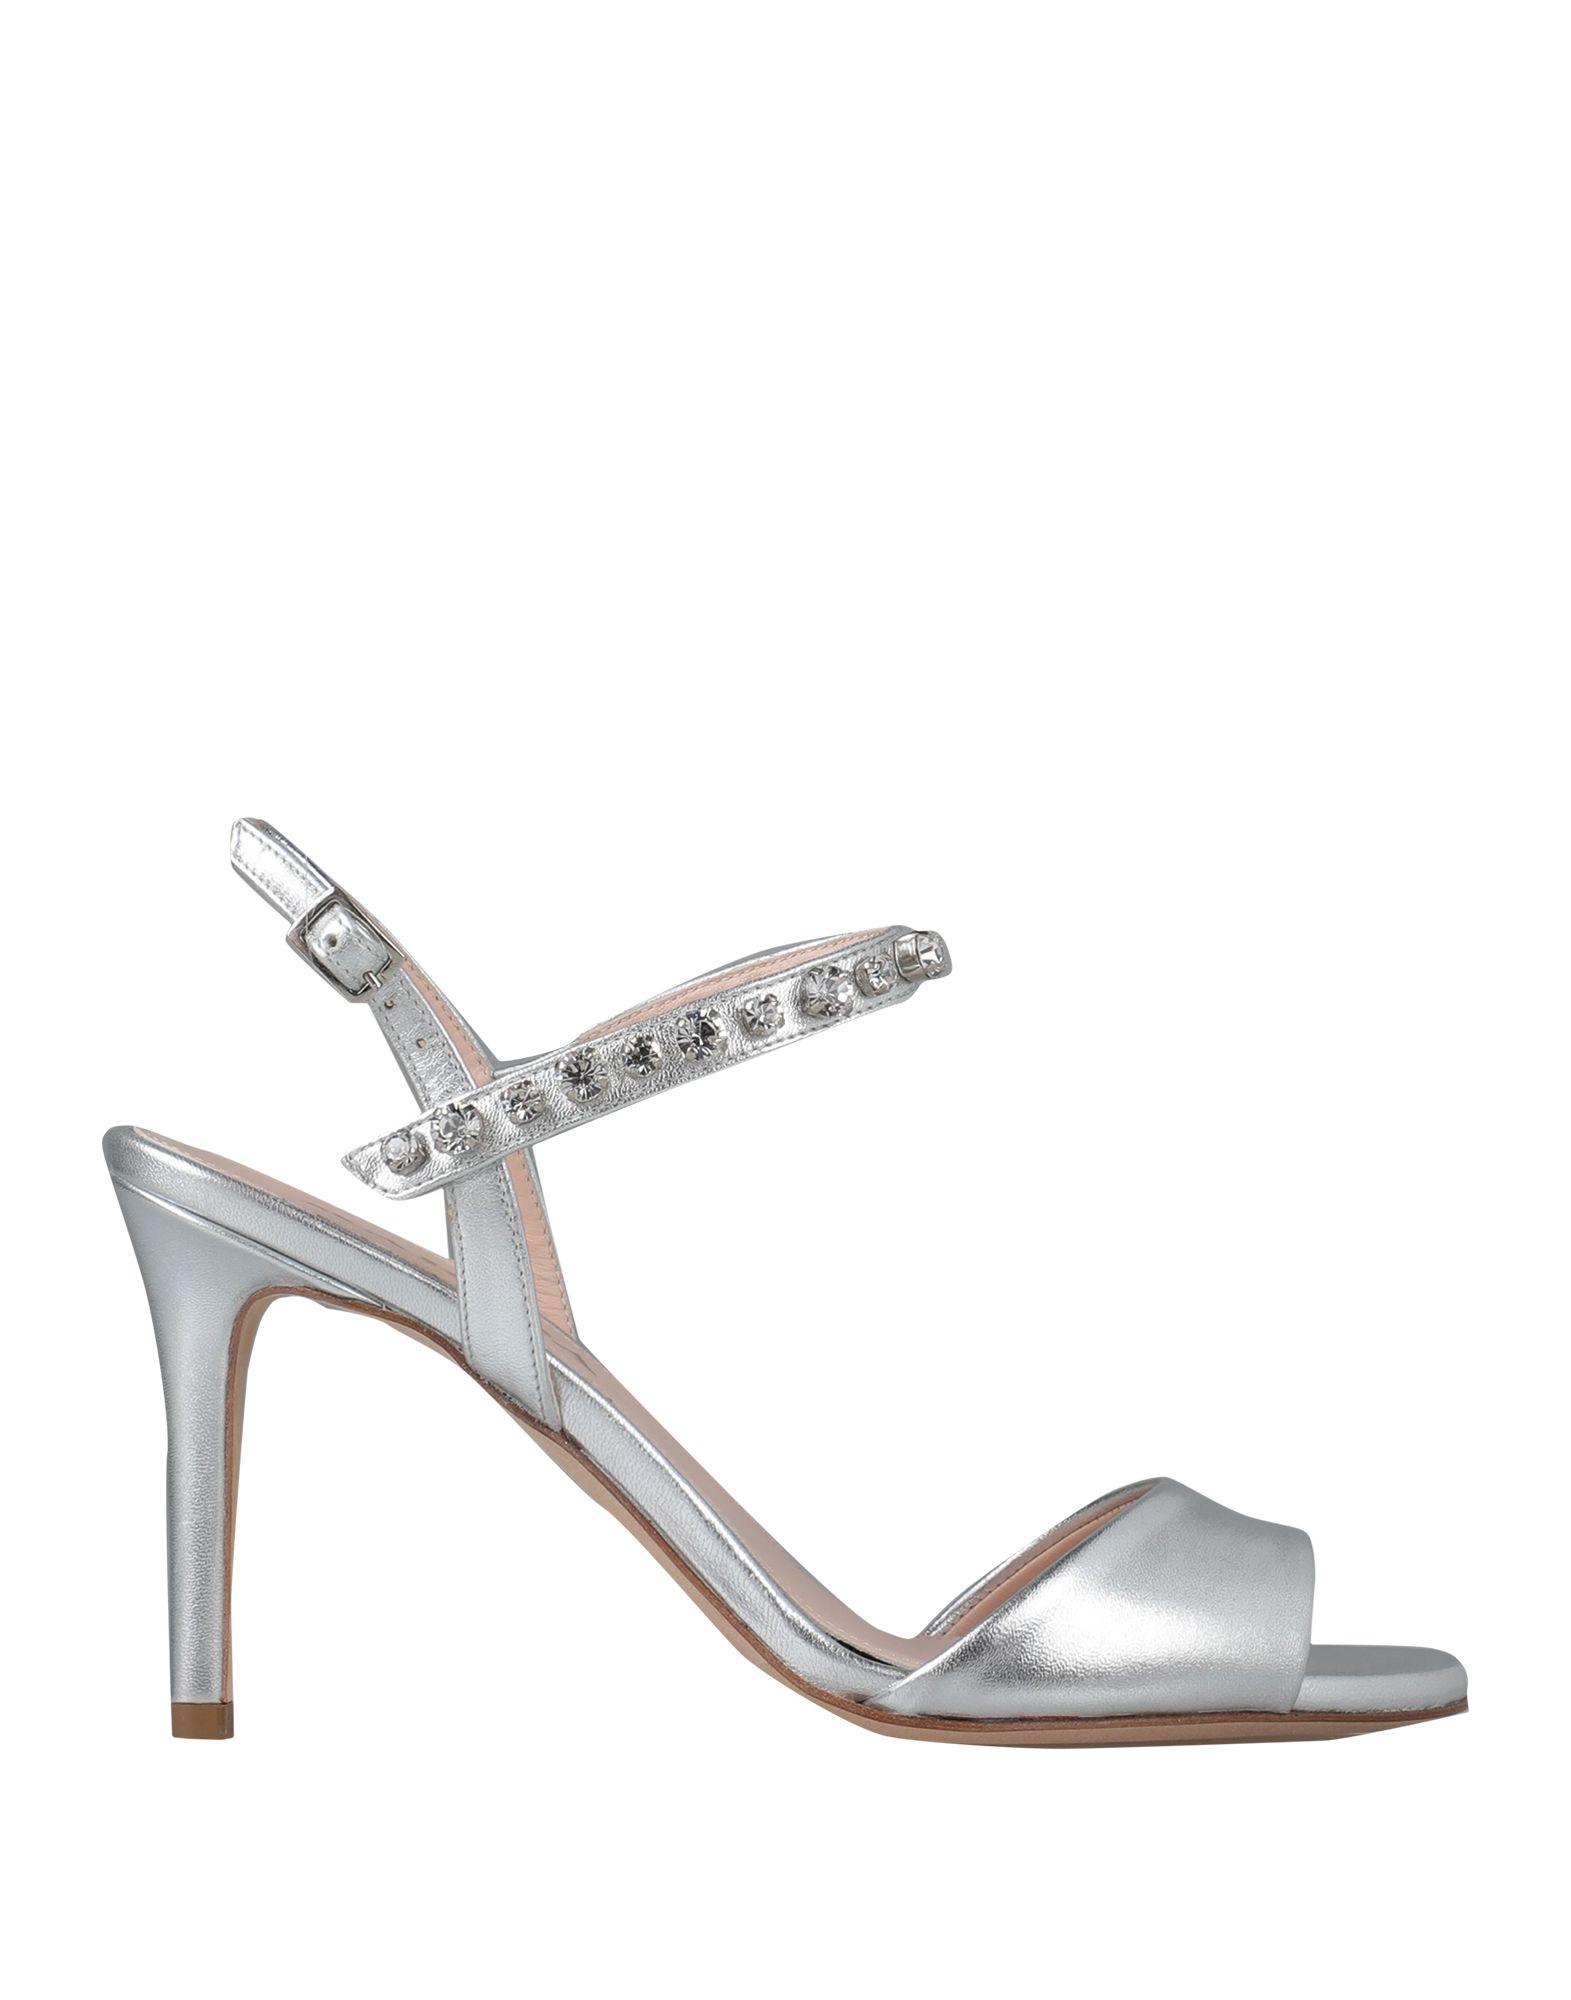 KARIDA Sandals in Silver (Metallic) - Lyst